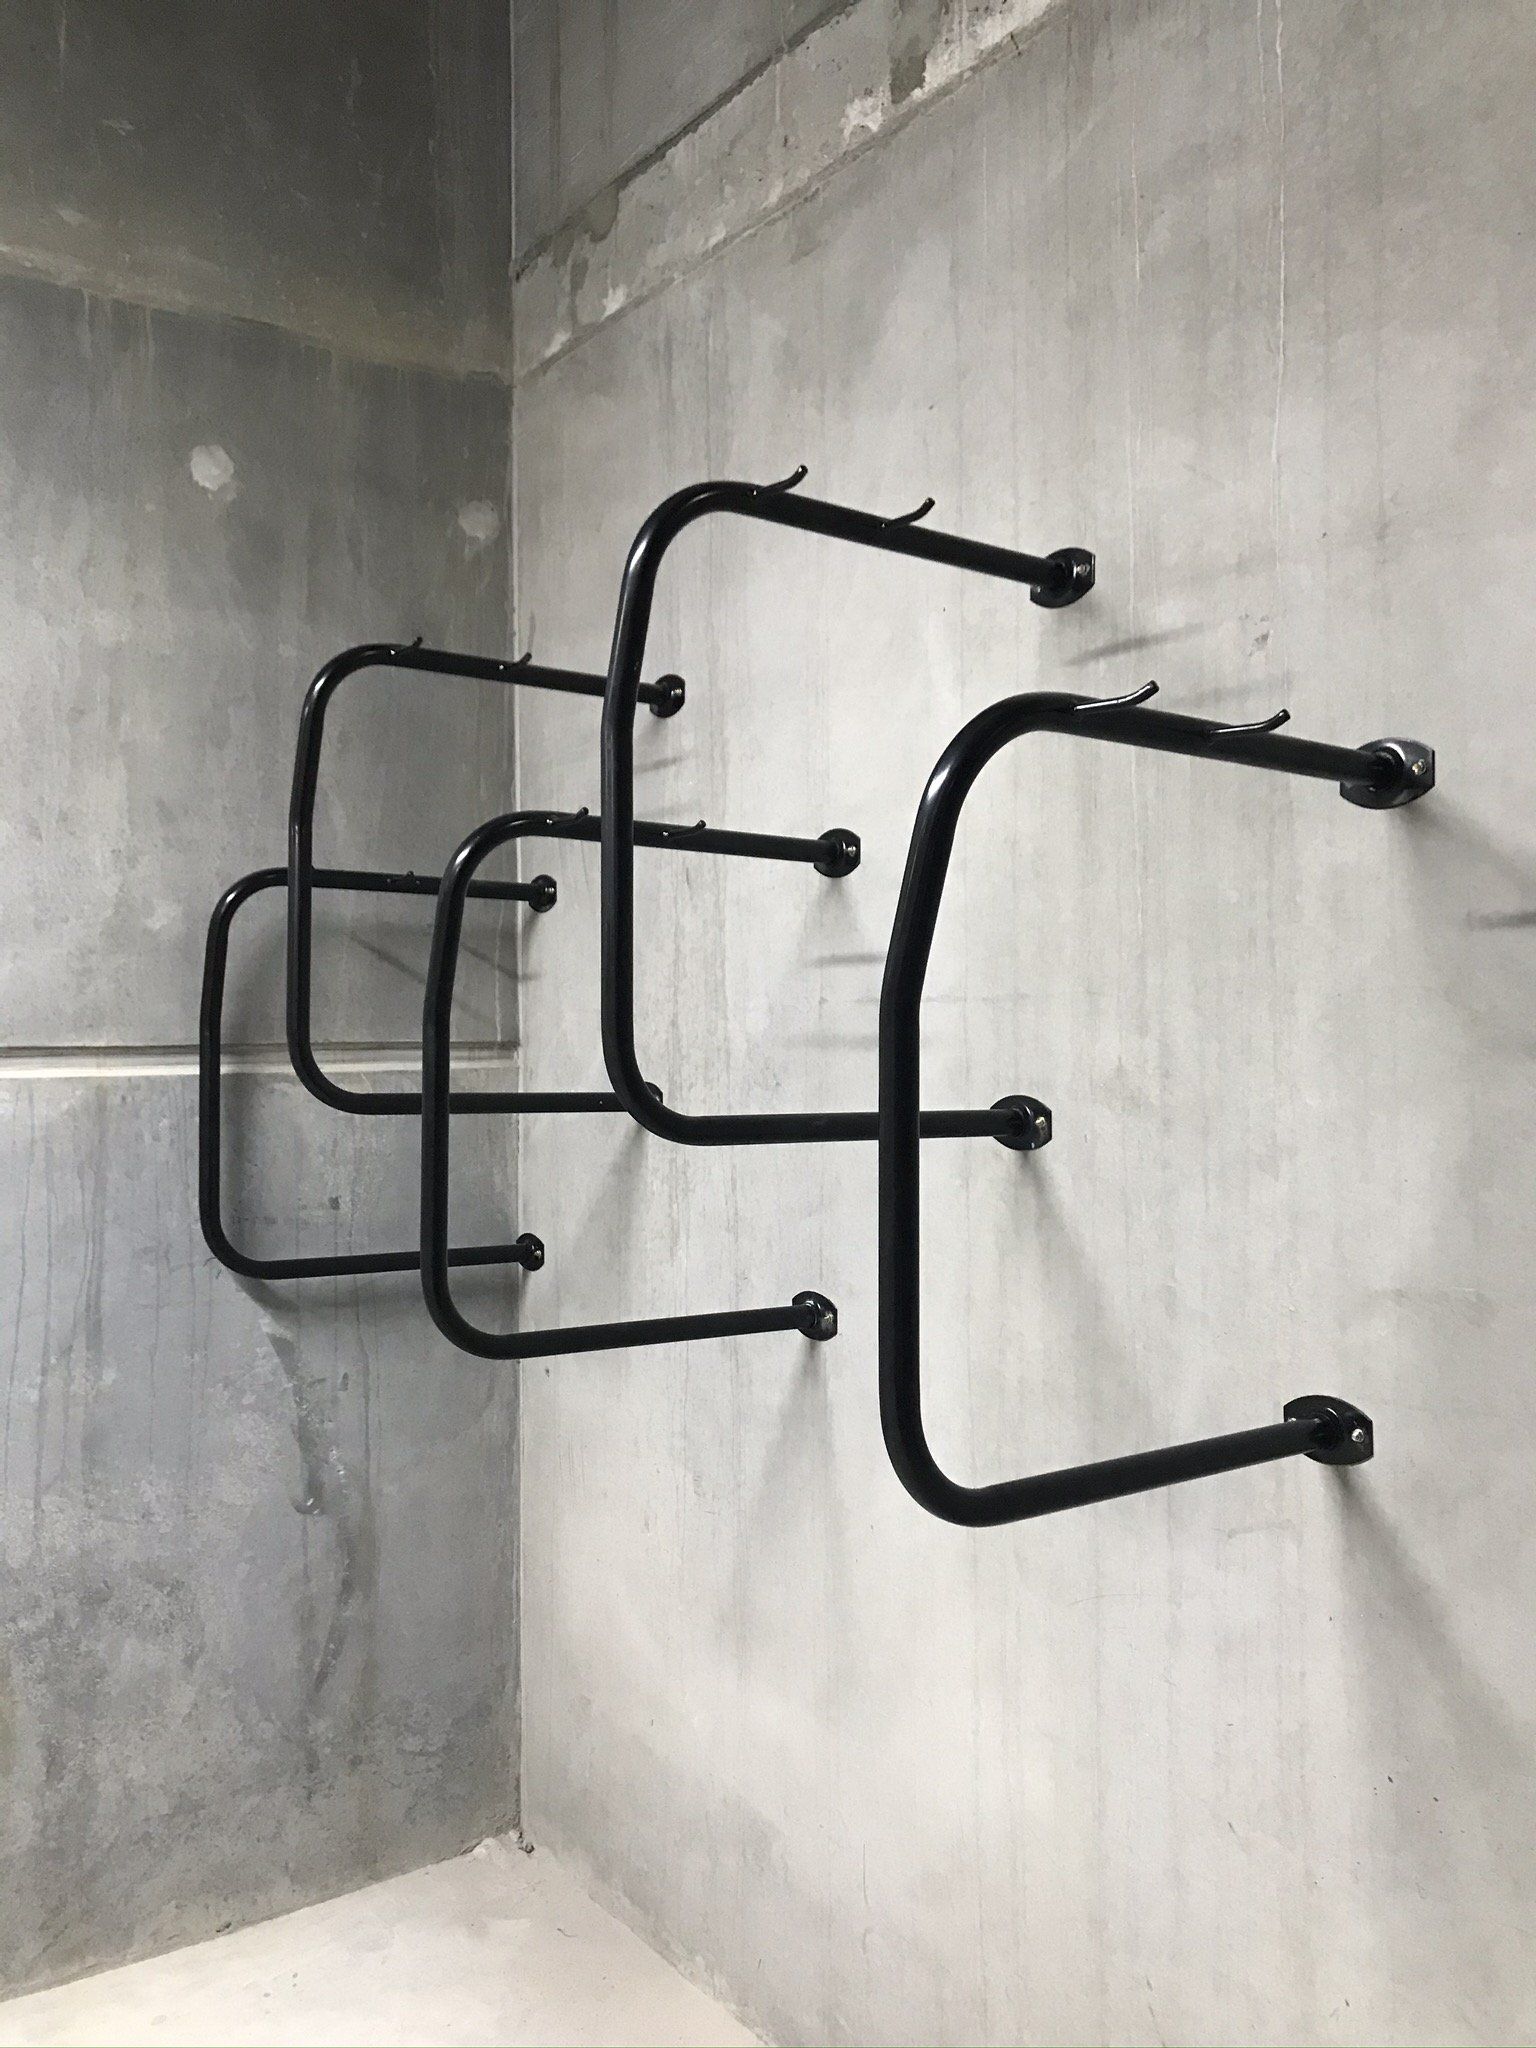 Hanging type bike racks mounted to a wall